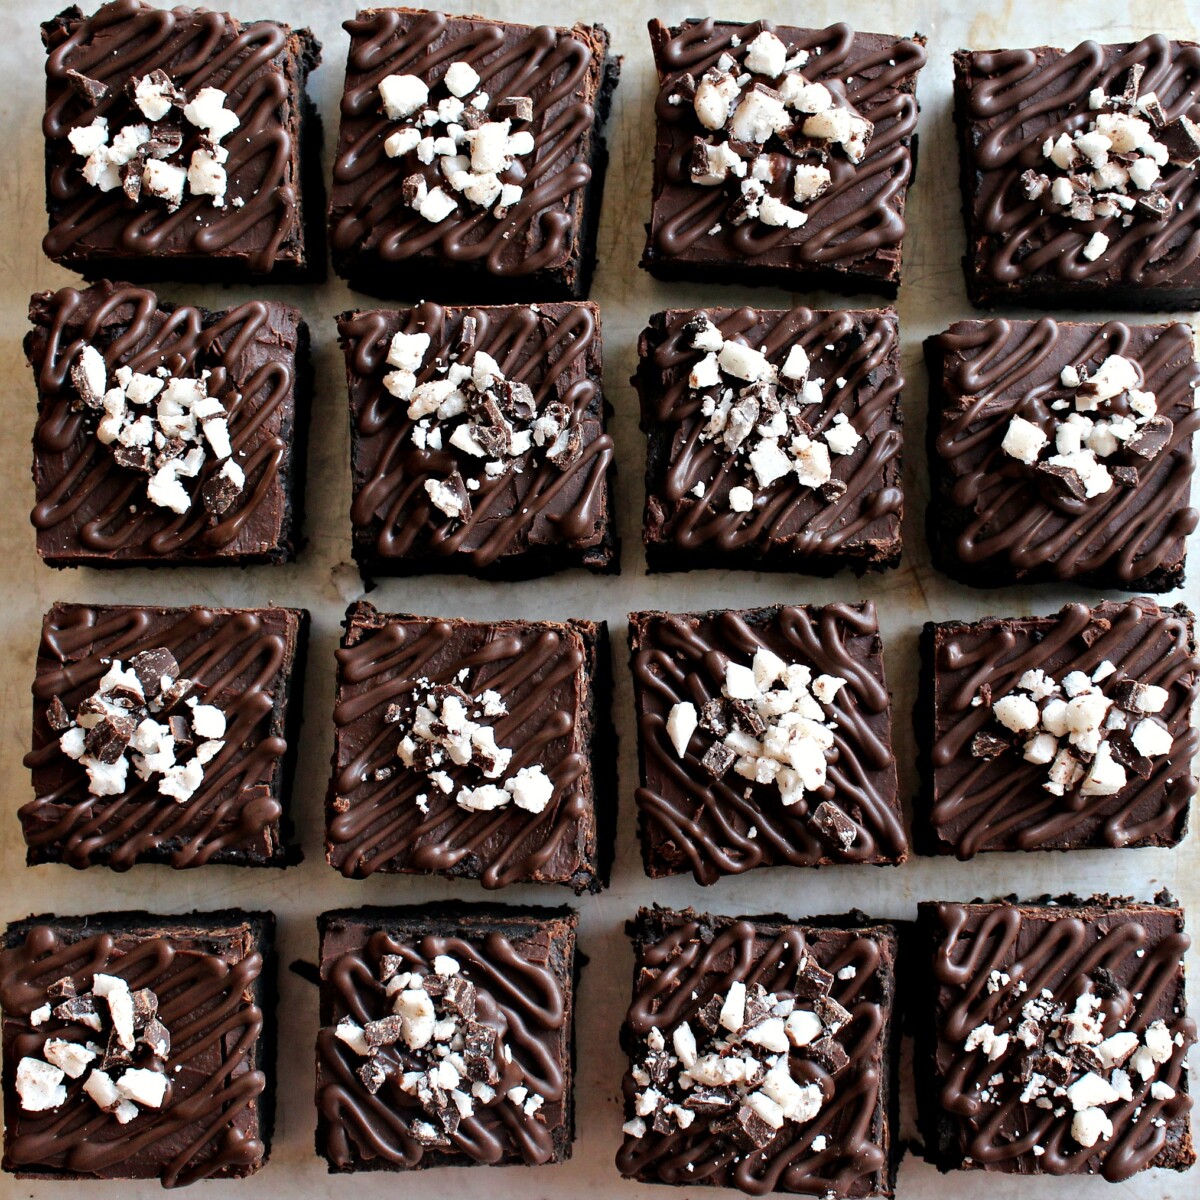 Brownies cut in squares.